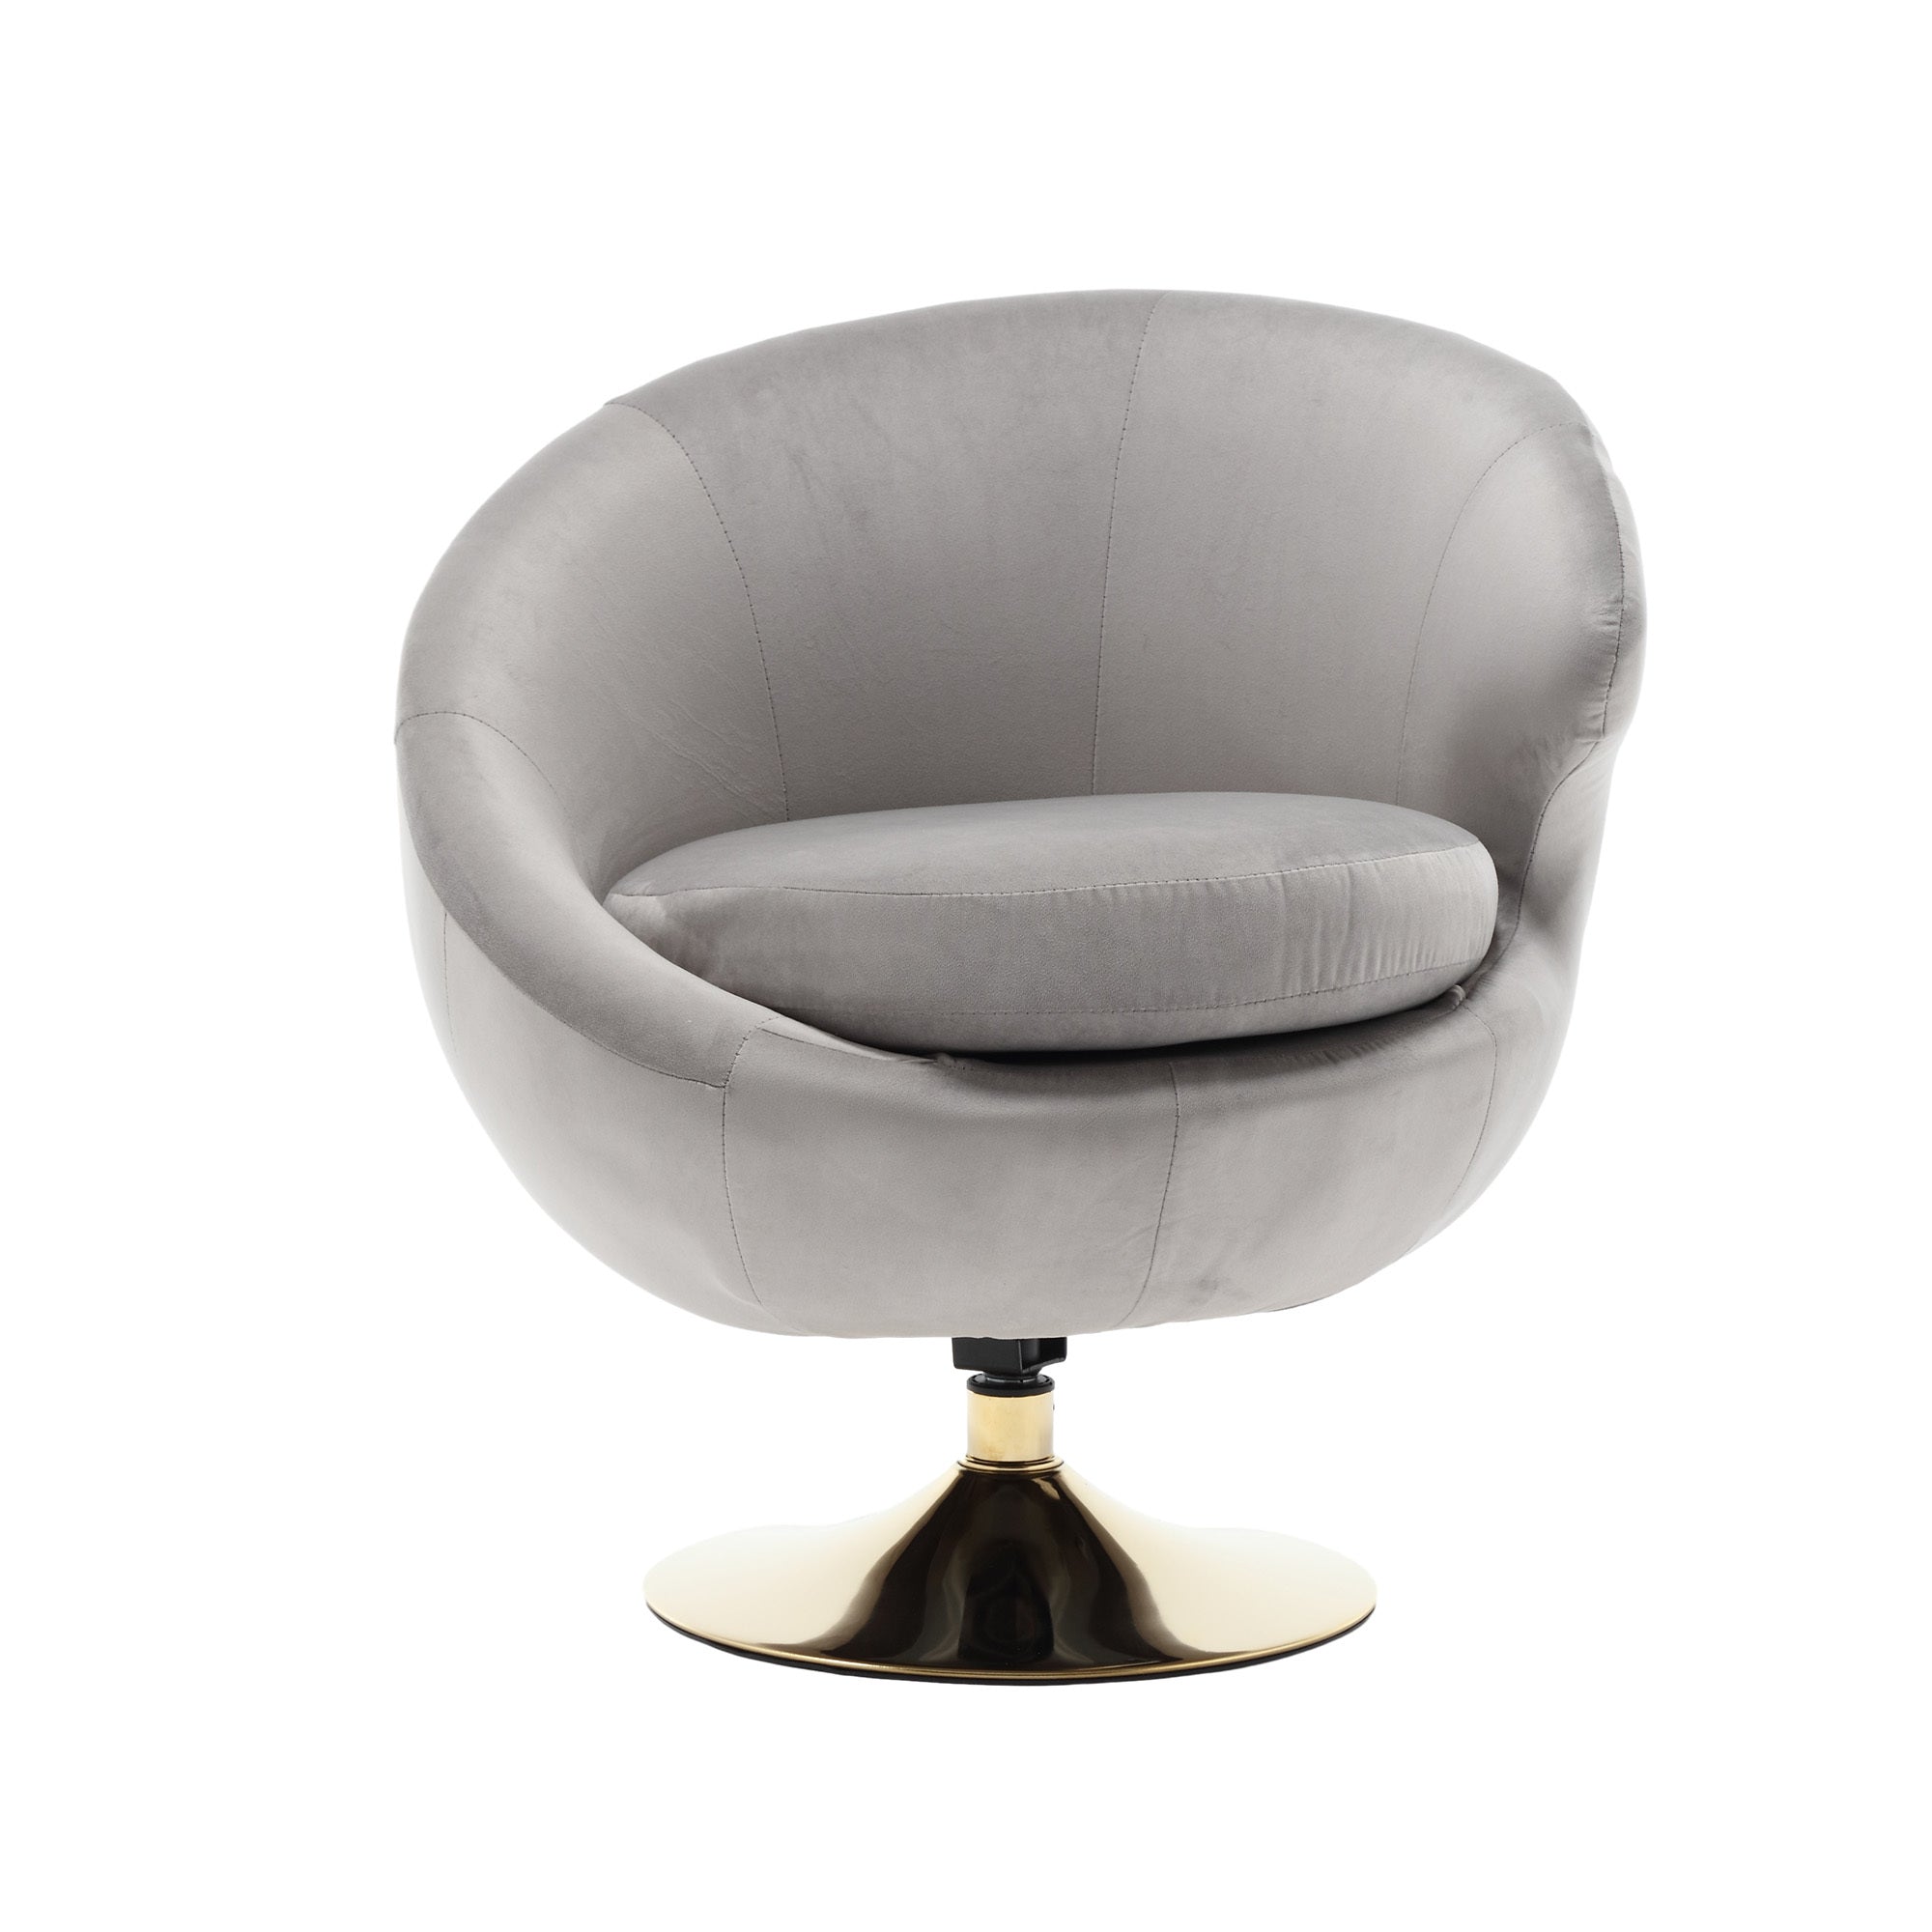 360 Degree Swivel Cuddle Barrel Accent Chairs, Round gray-velvet